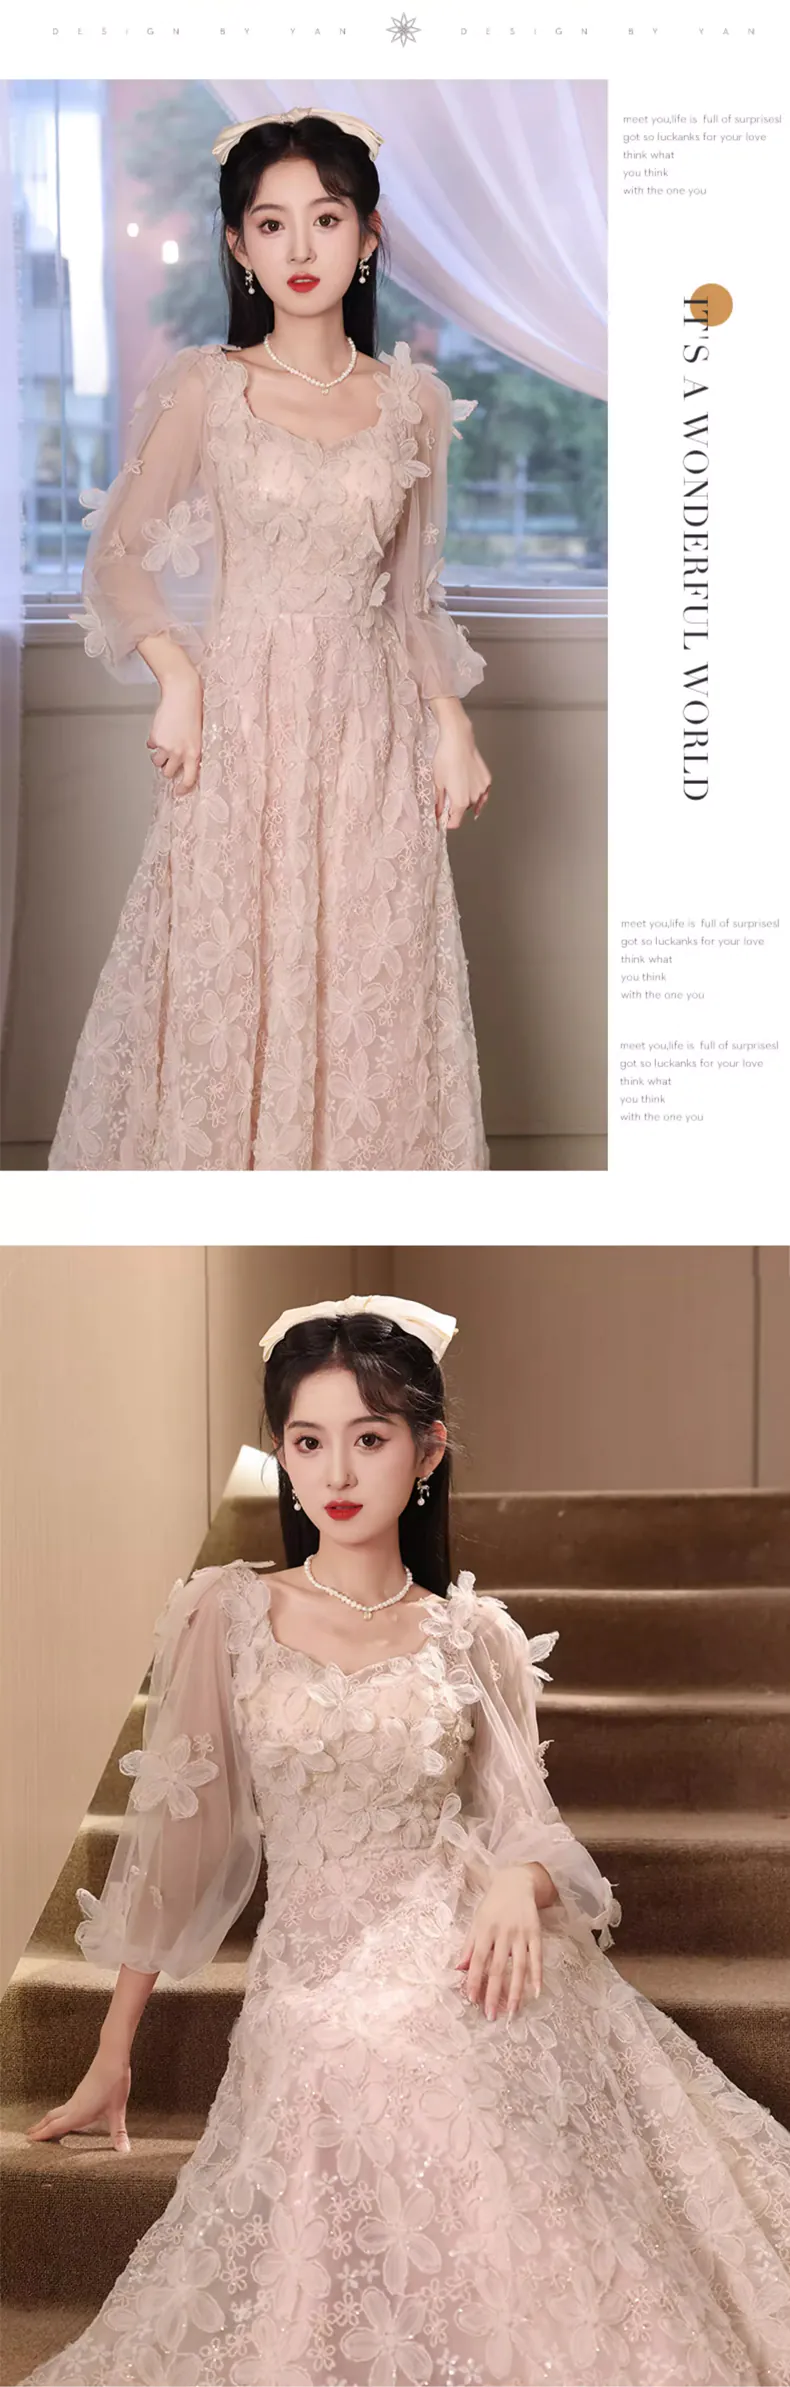 Elegant-Pink-Flower-Petal-Long-Tulle-Sleeve-Cocktail-Prom-Party-Dress11